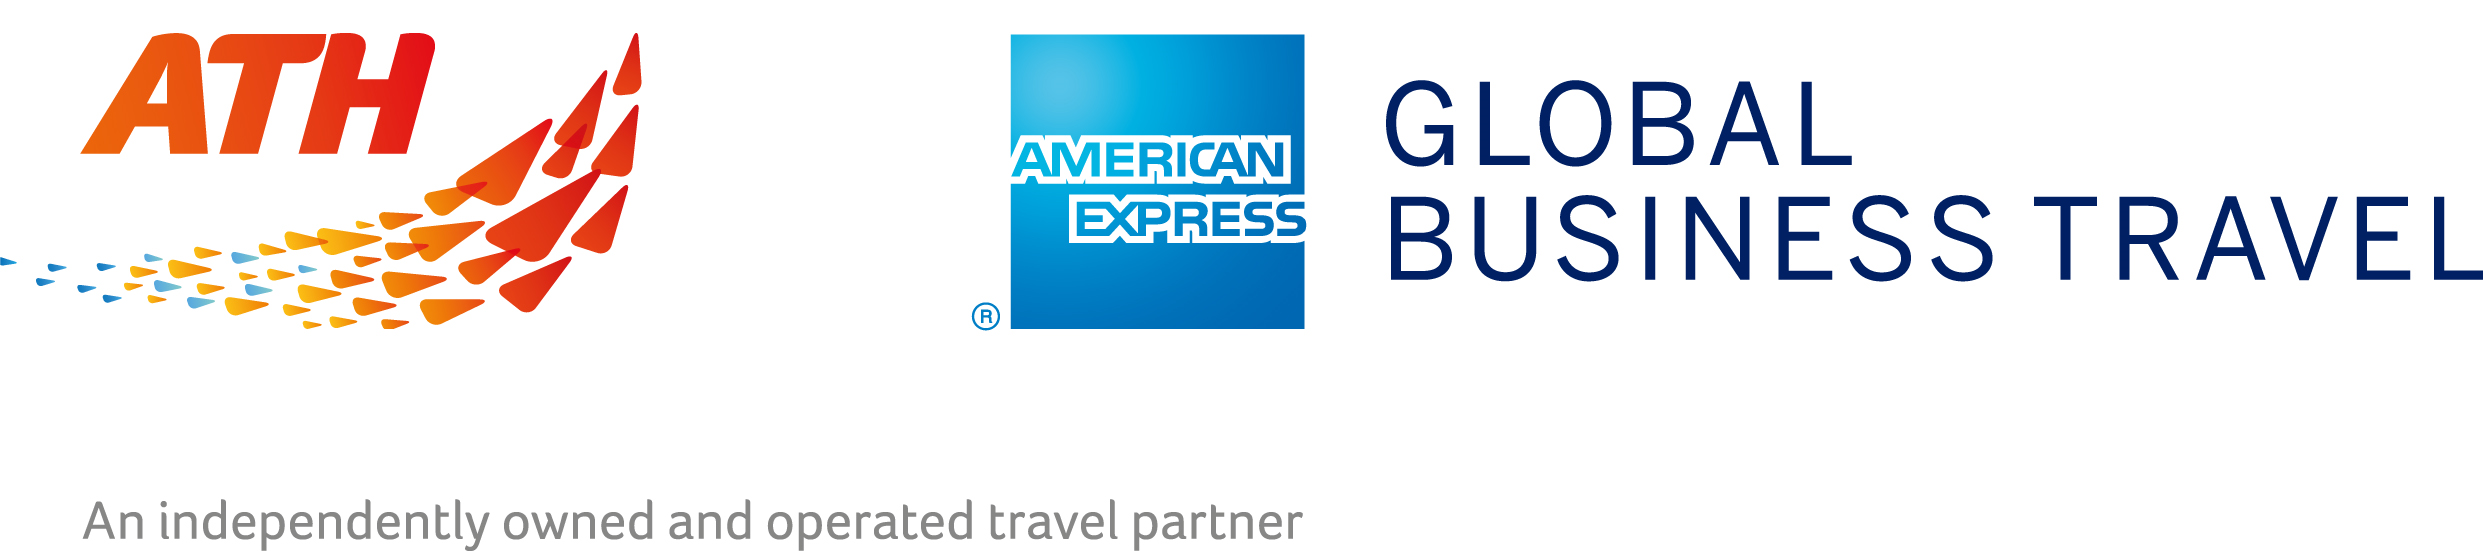 Global press. ATH логотип. ATH American Express. American Express Business Travel. ЭЙТИЭЙЧ логотип.